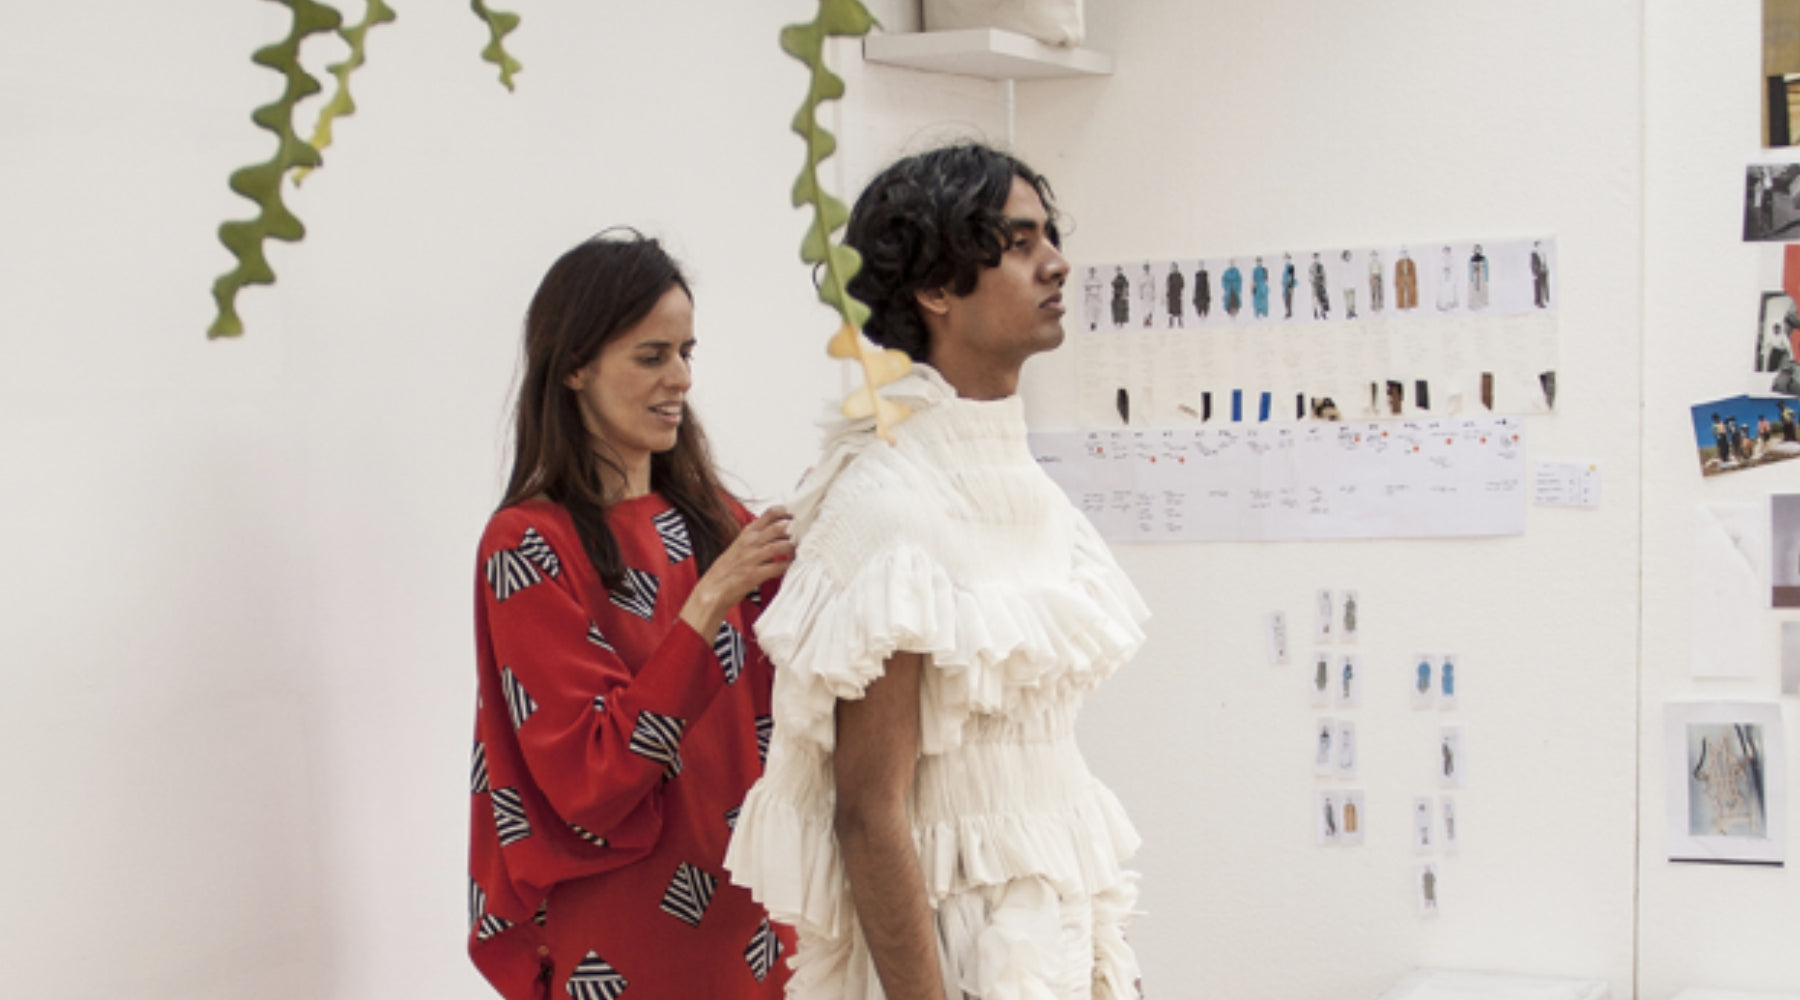 LONDON FASHION WEEK: Brazil: Creating Fashion For Tomorrow - Renata Brenha